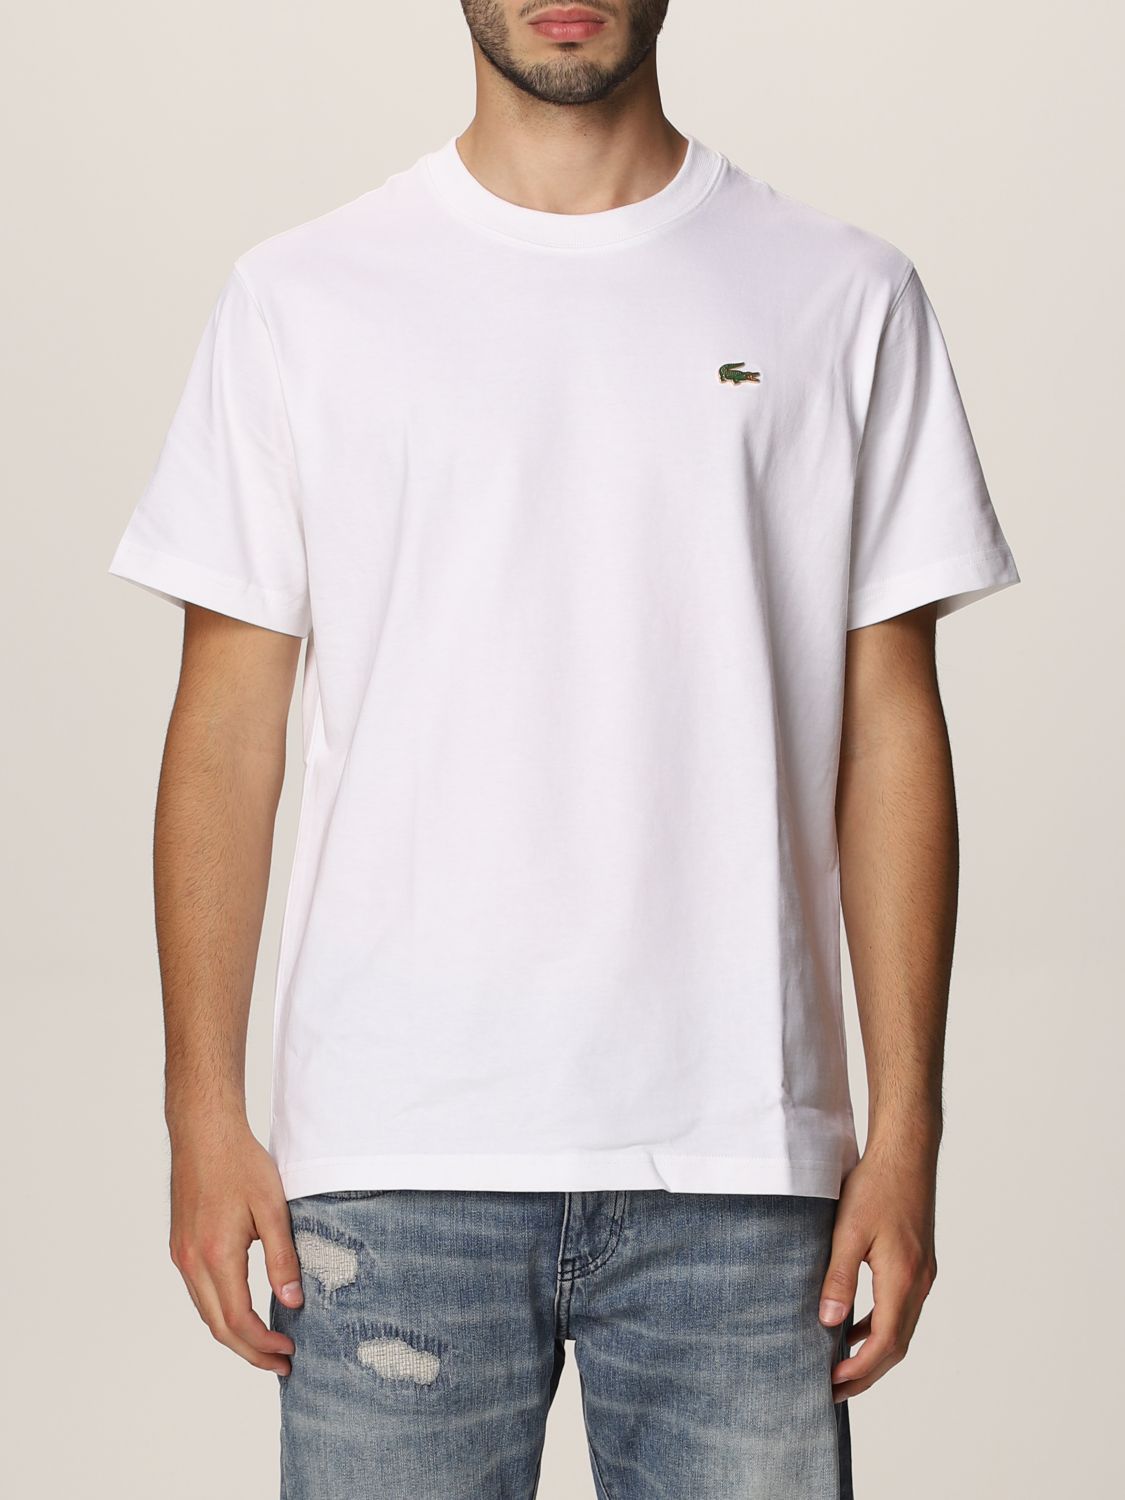 LACOSTE L!VE: T-shirt with logo - White | T-Shirt Lacoste L!Ve TH9166 ...